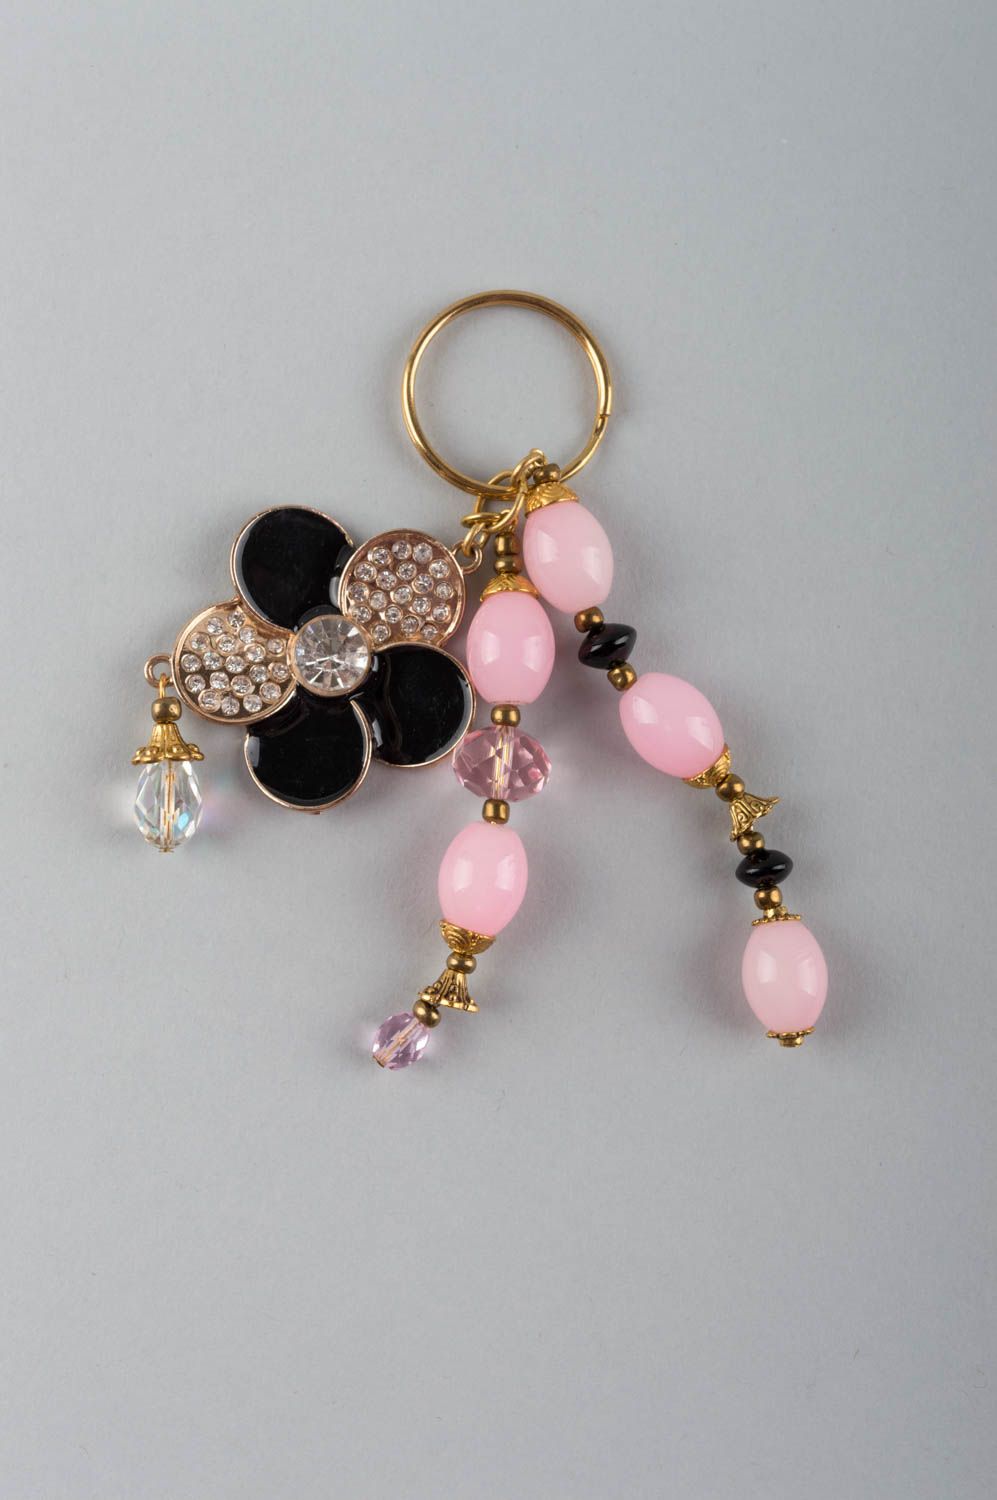 Women's handmade designer brass keychain with glass beads and natural stone photo 1